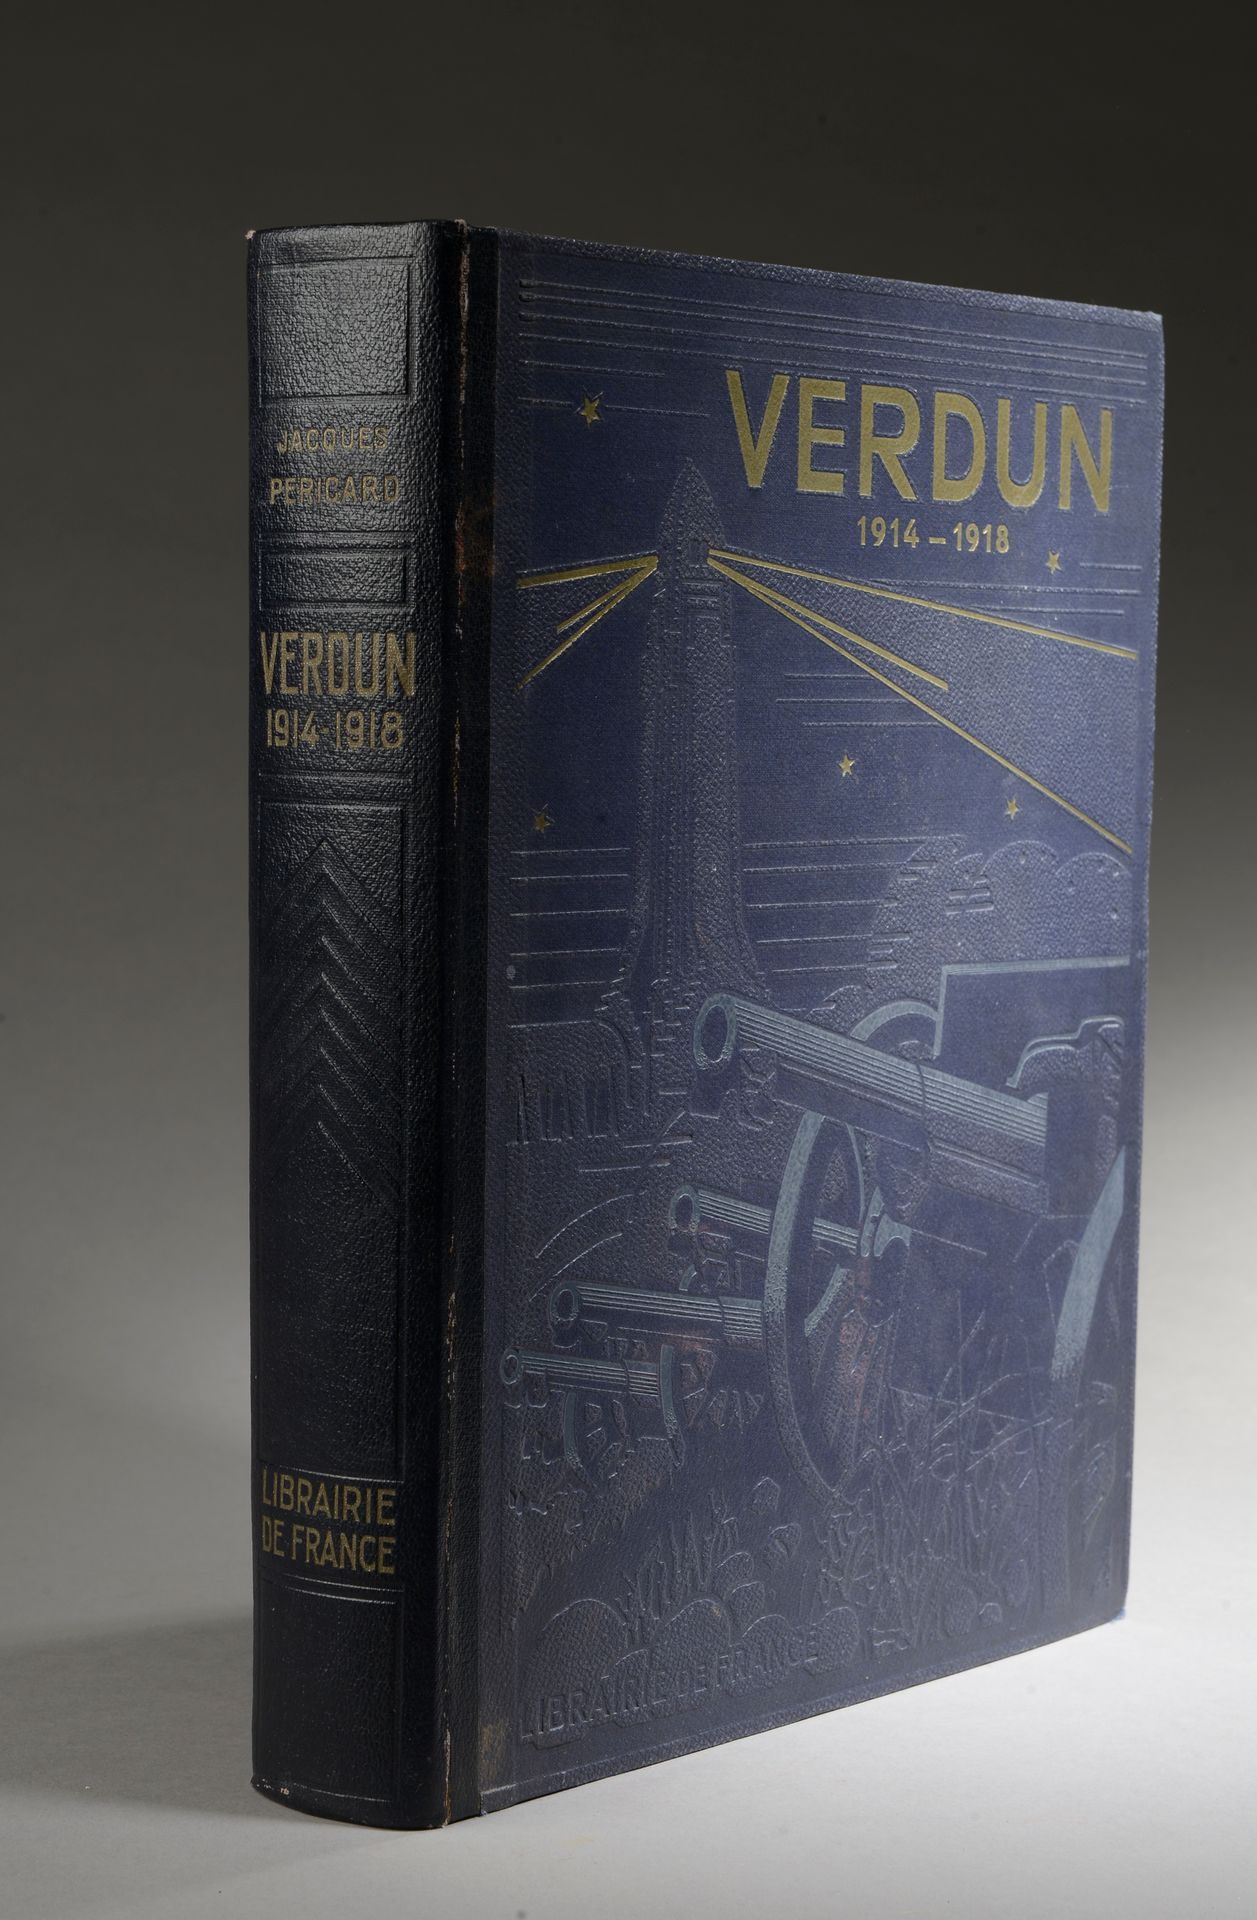 Null PERICARD (Jacques), Verdun 1914-1918, Paris, Librairie de France, 1934. 

I&hellip;